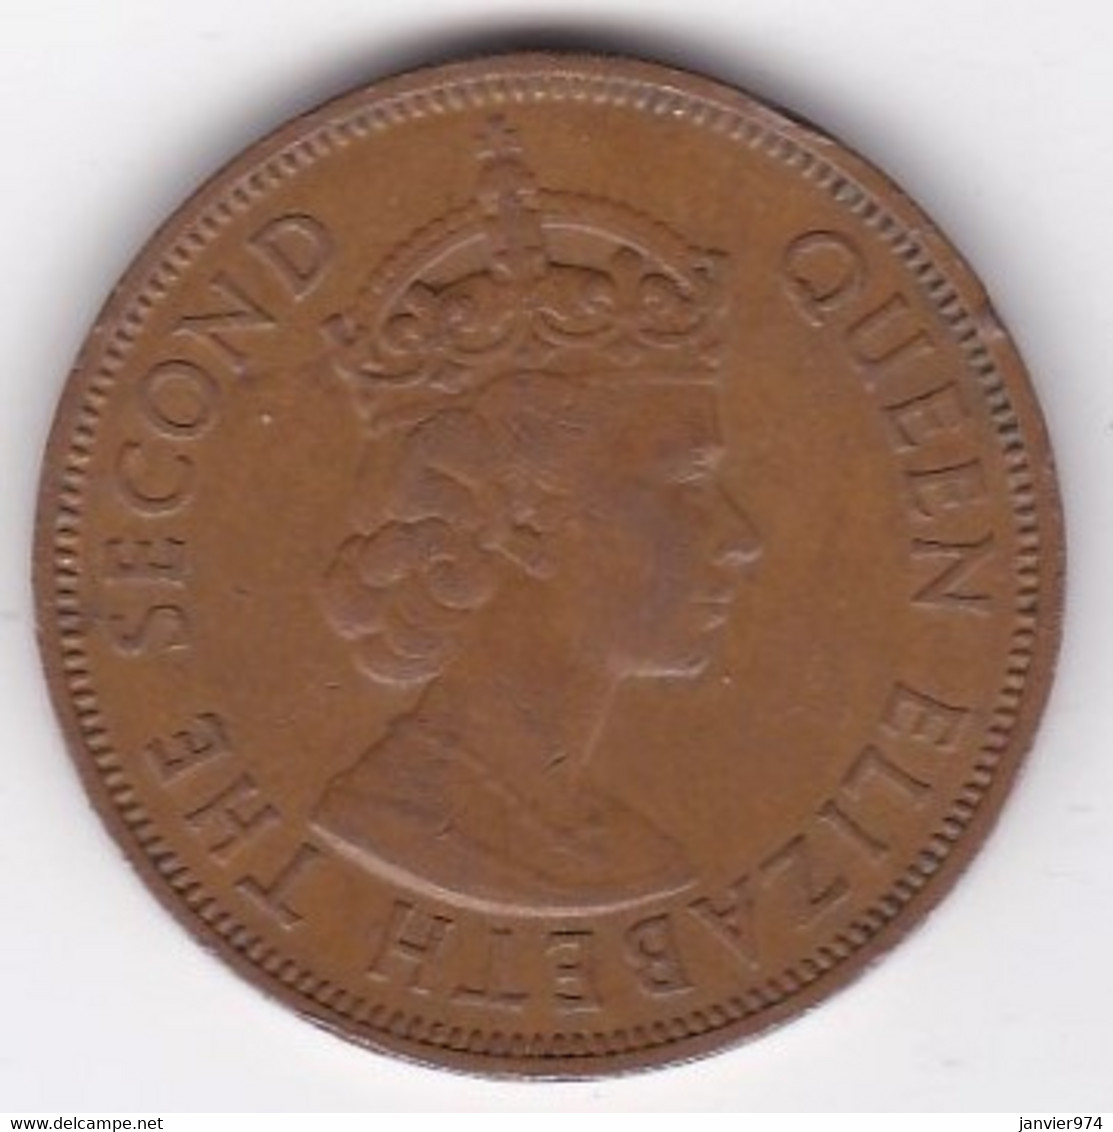 Ile Maurice , 5 Cents 1964 , Elizabeth II, KM# 34 - Mauritius